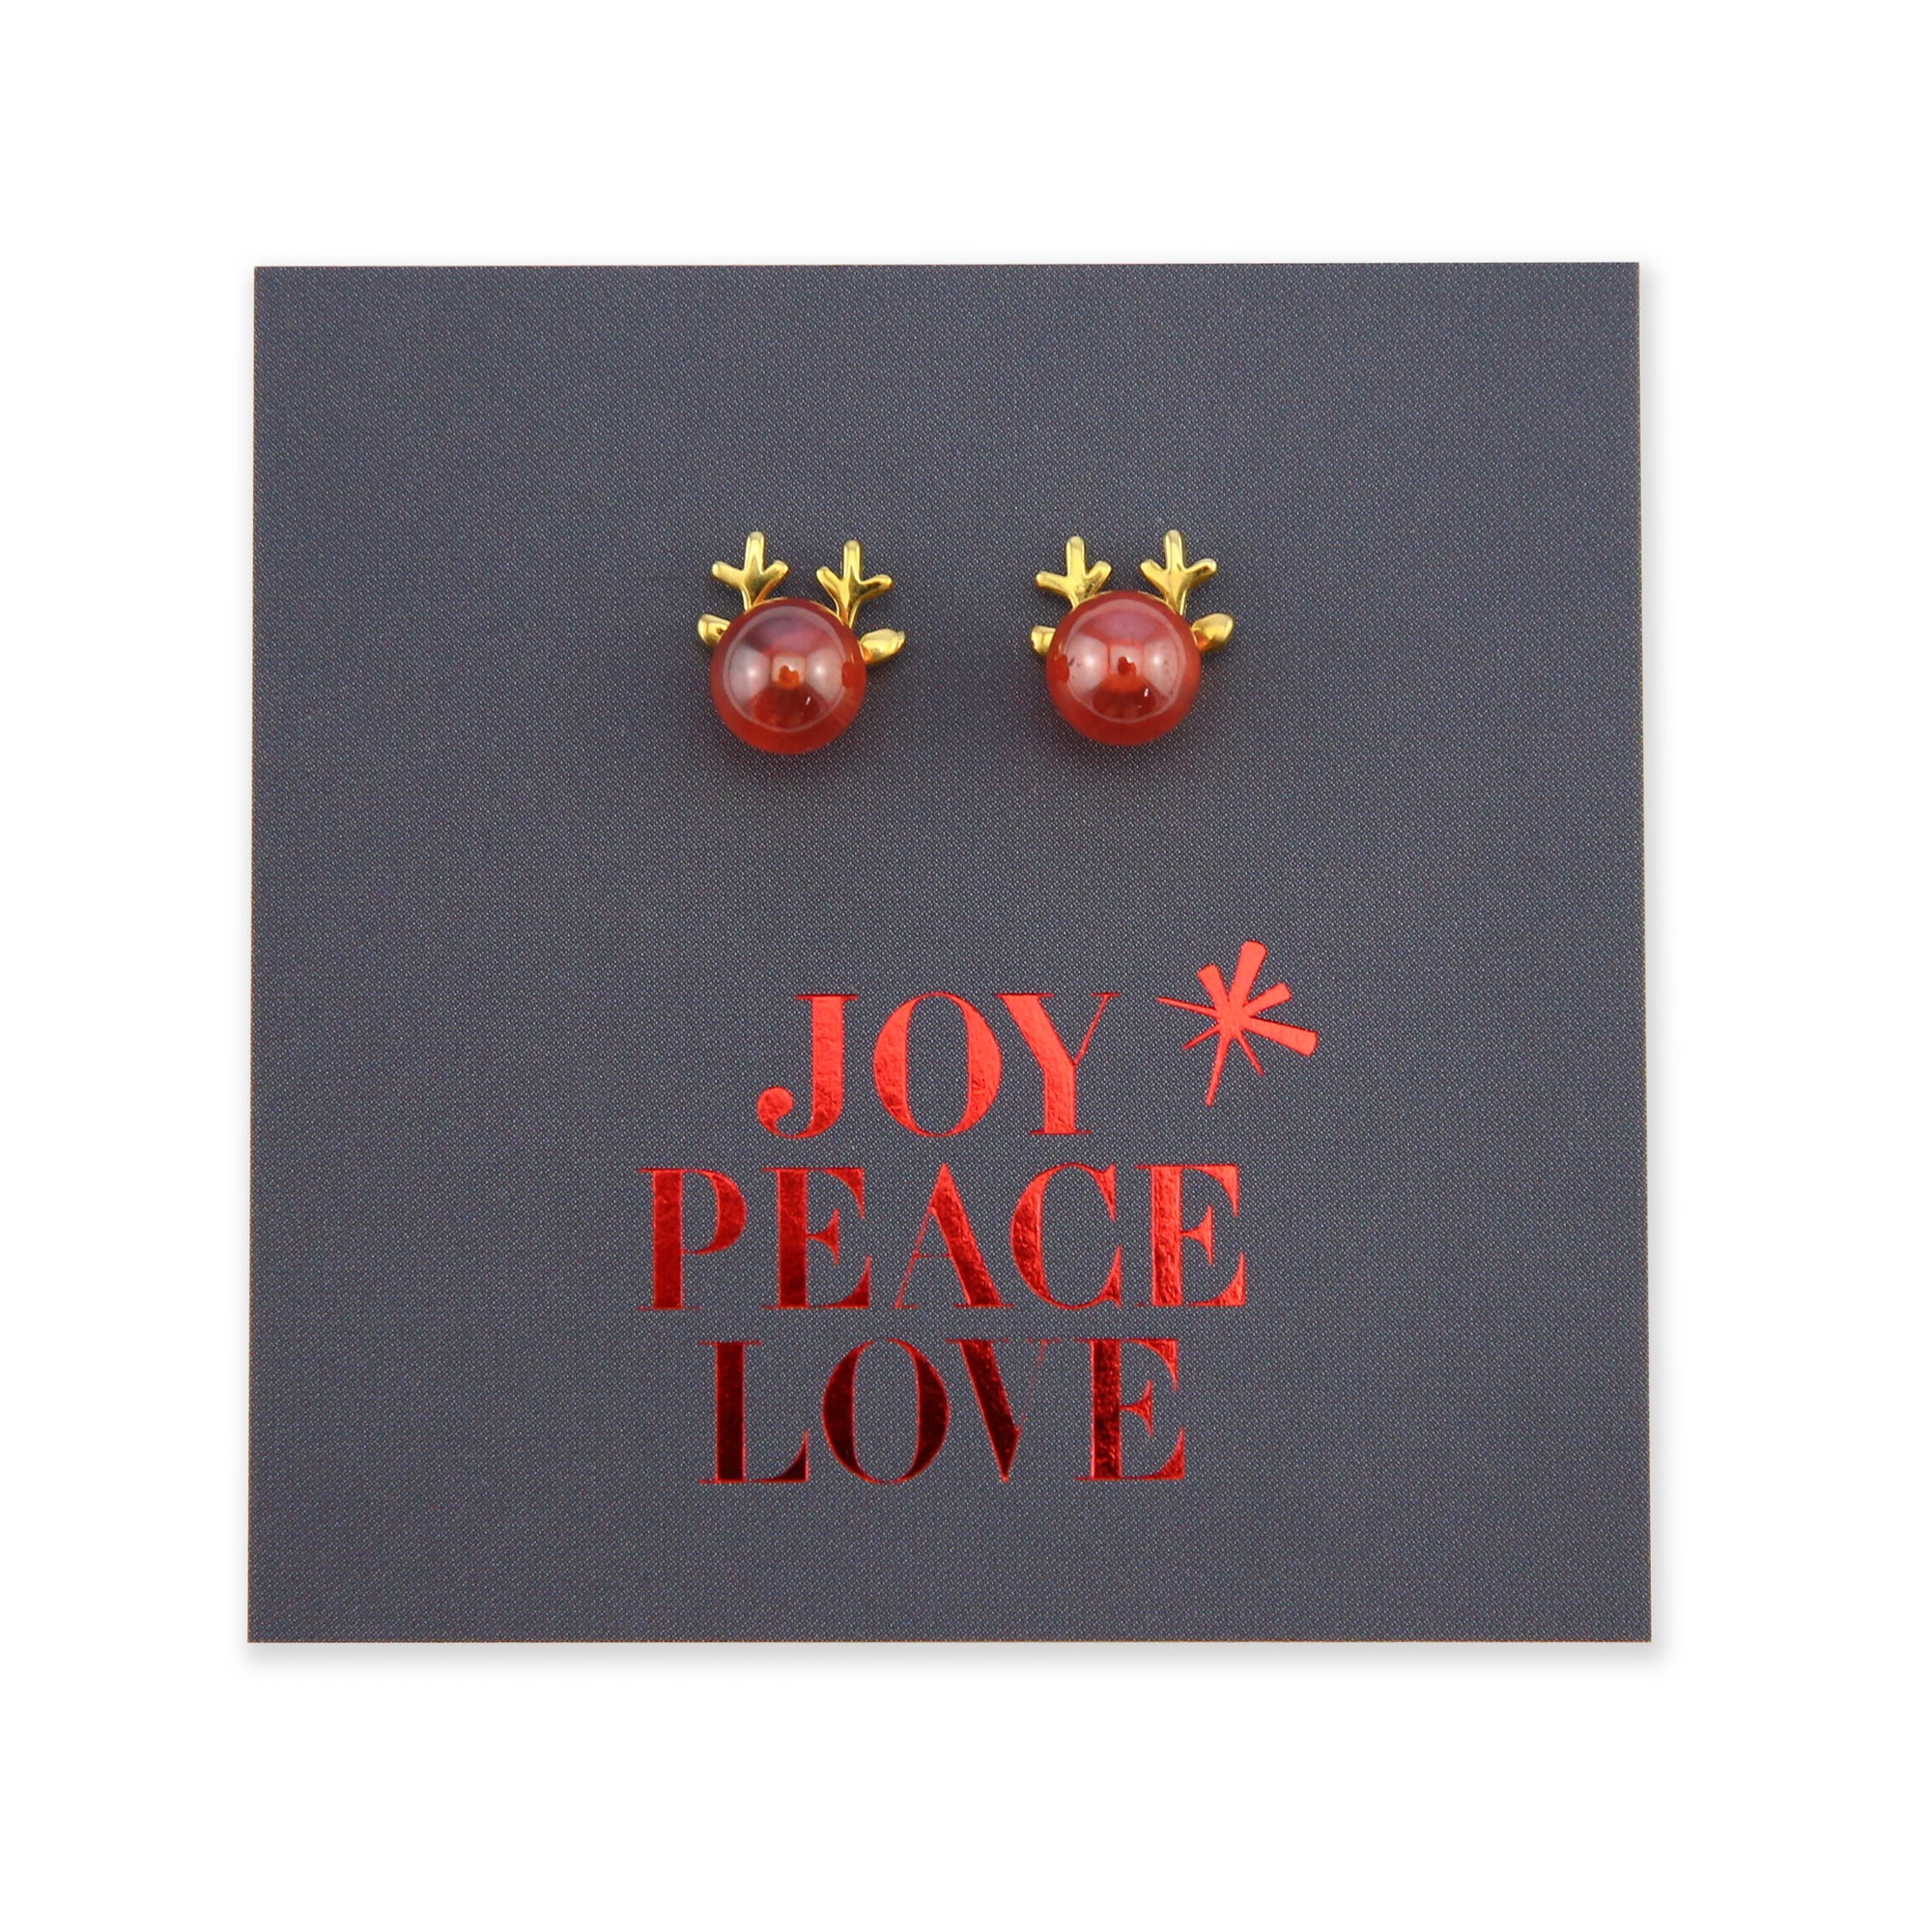 Reindeer Nose - Gold Sterling Silver  Studs- Joy Peace Love (8614-F)